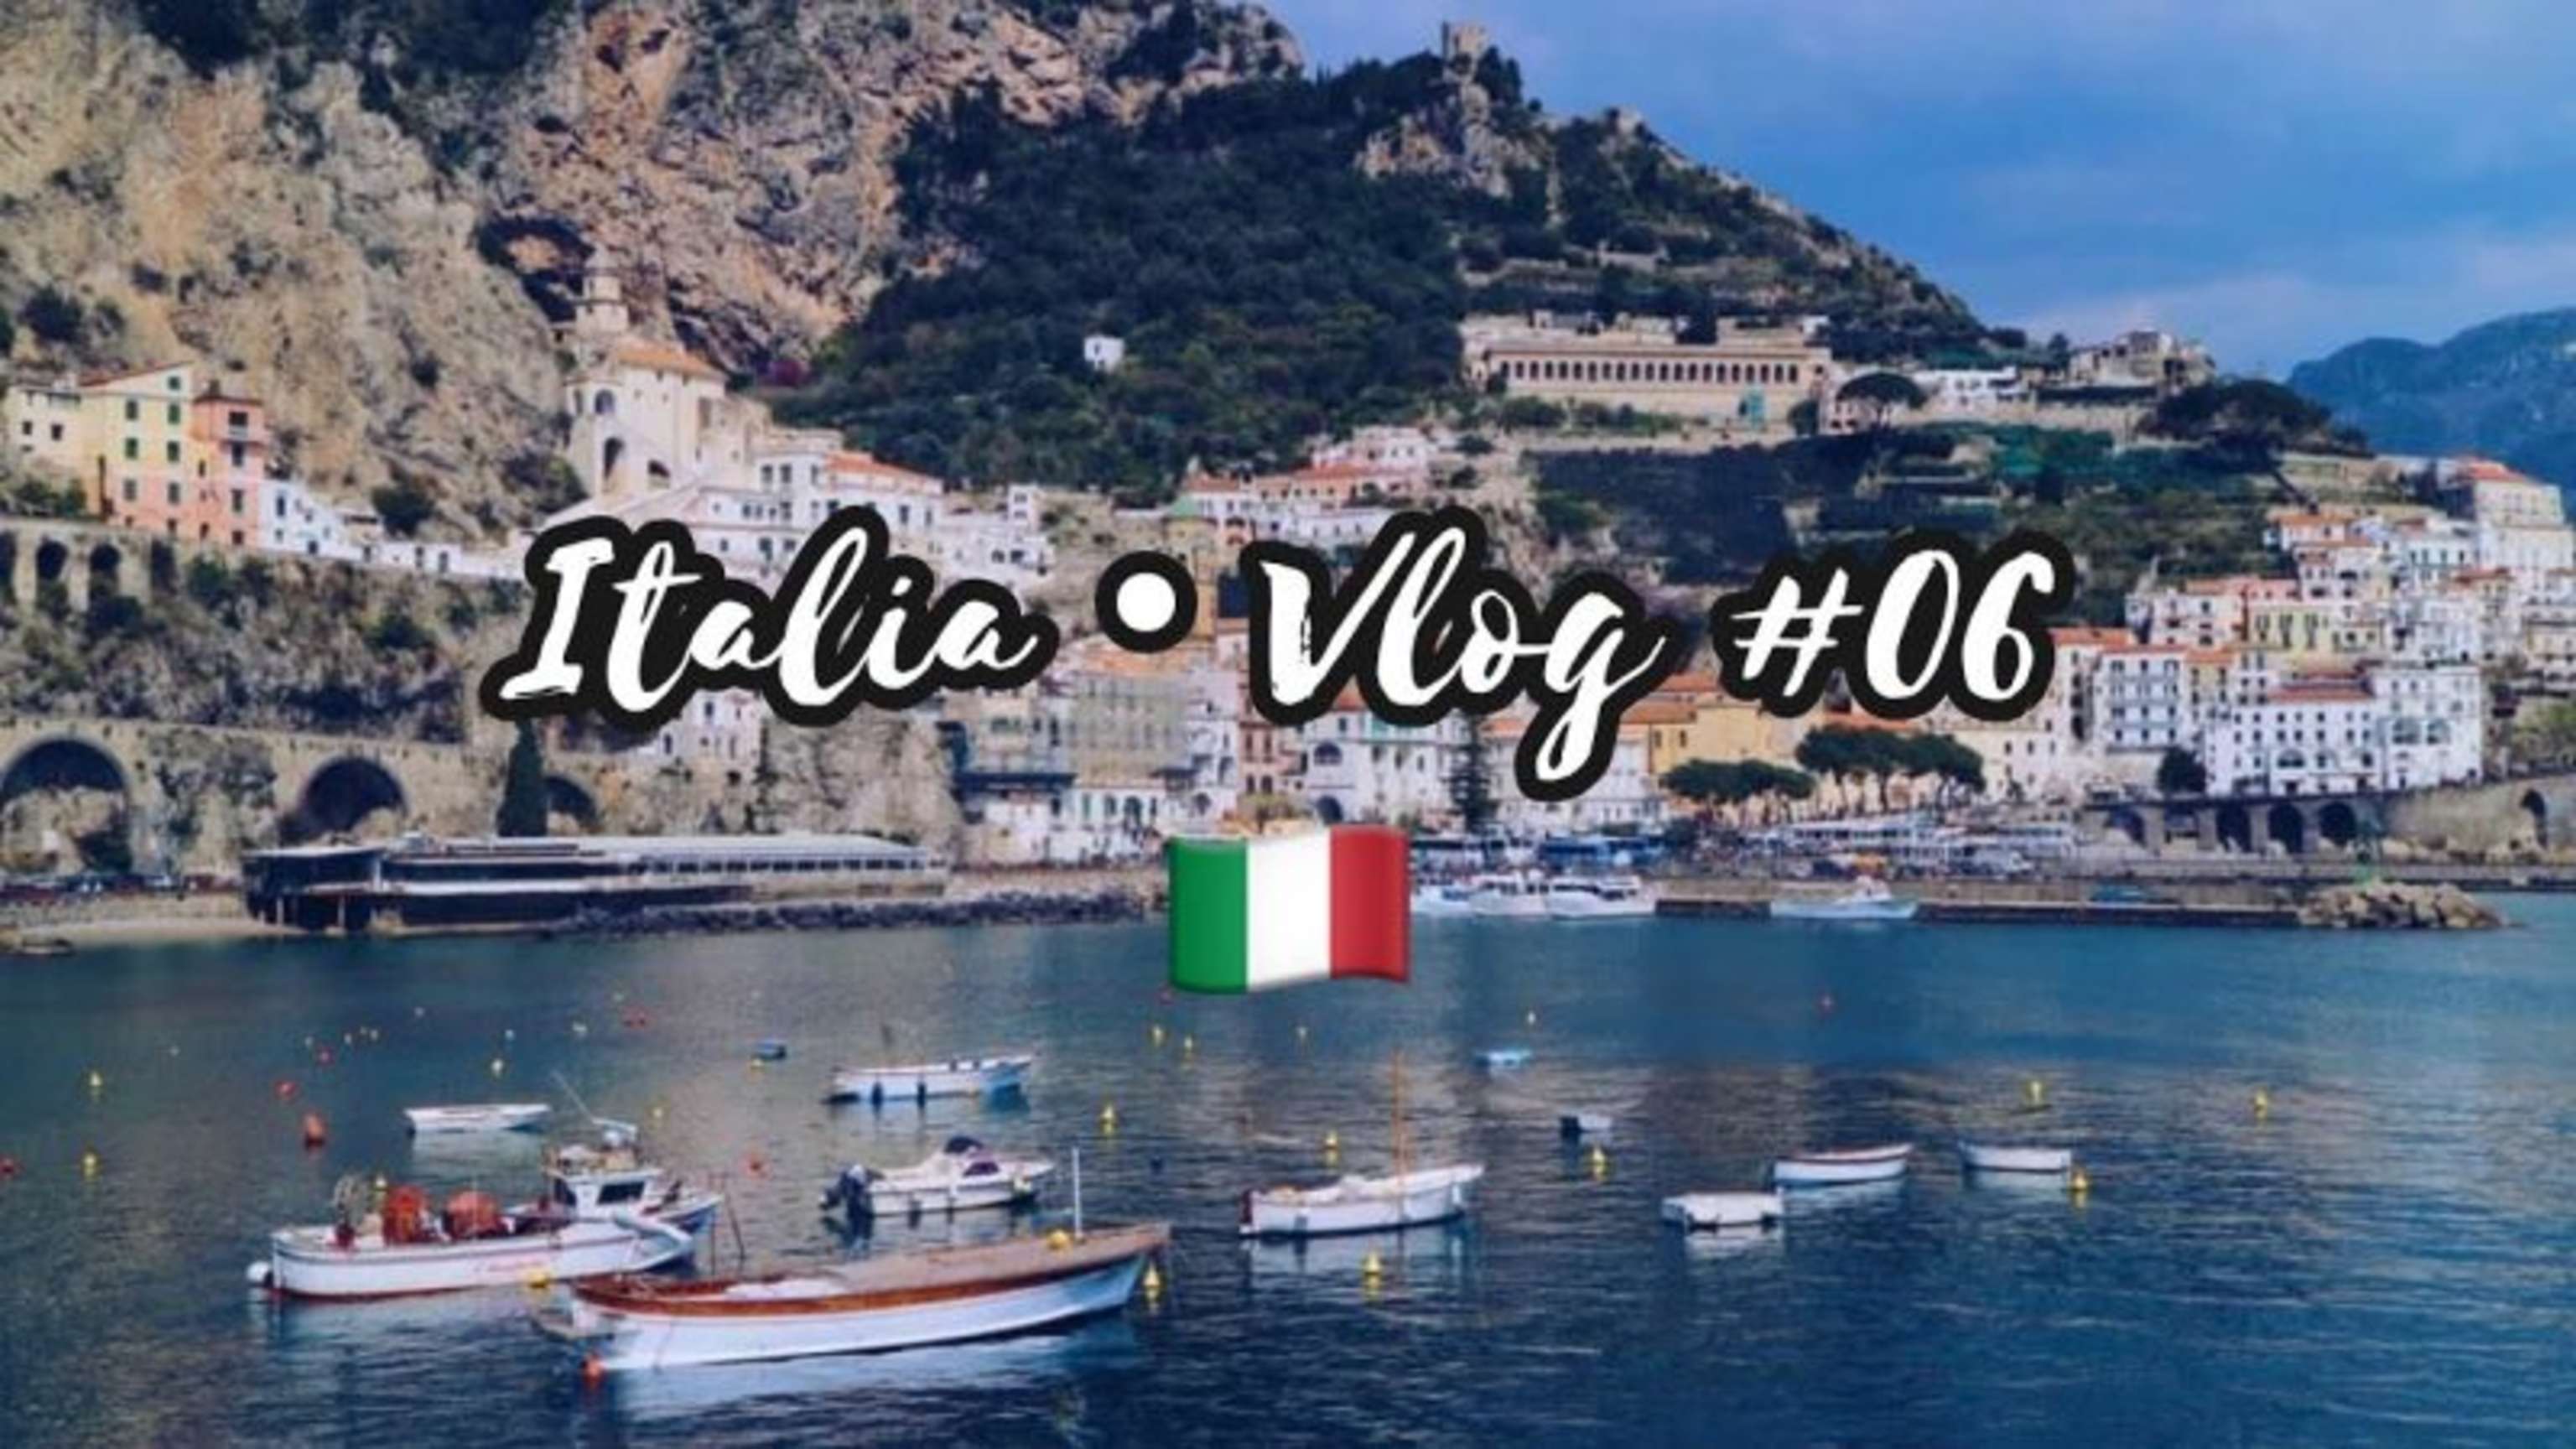 Recorremos toda la COSTA AMALFITANA: Sorrento, Ravello, Amalfi y Positano 🇮🇹 | ITALIA VLOGS #06